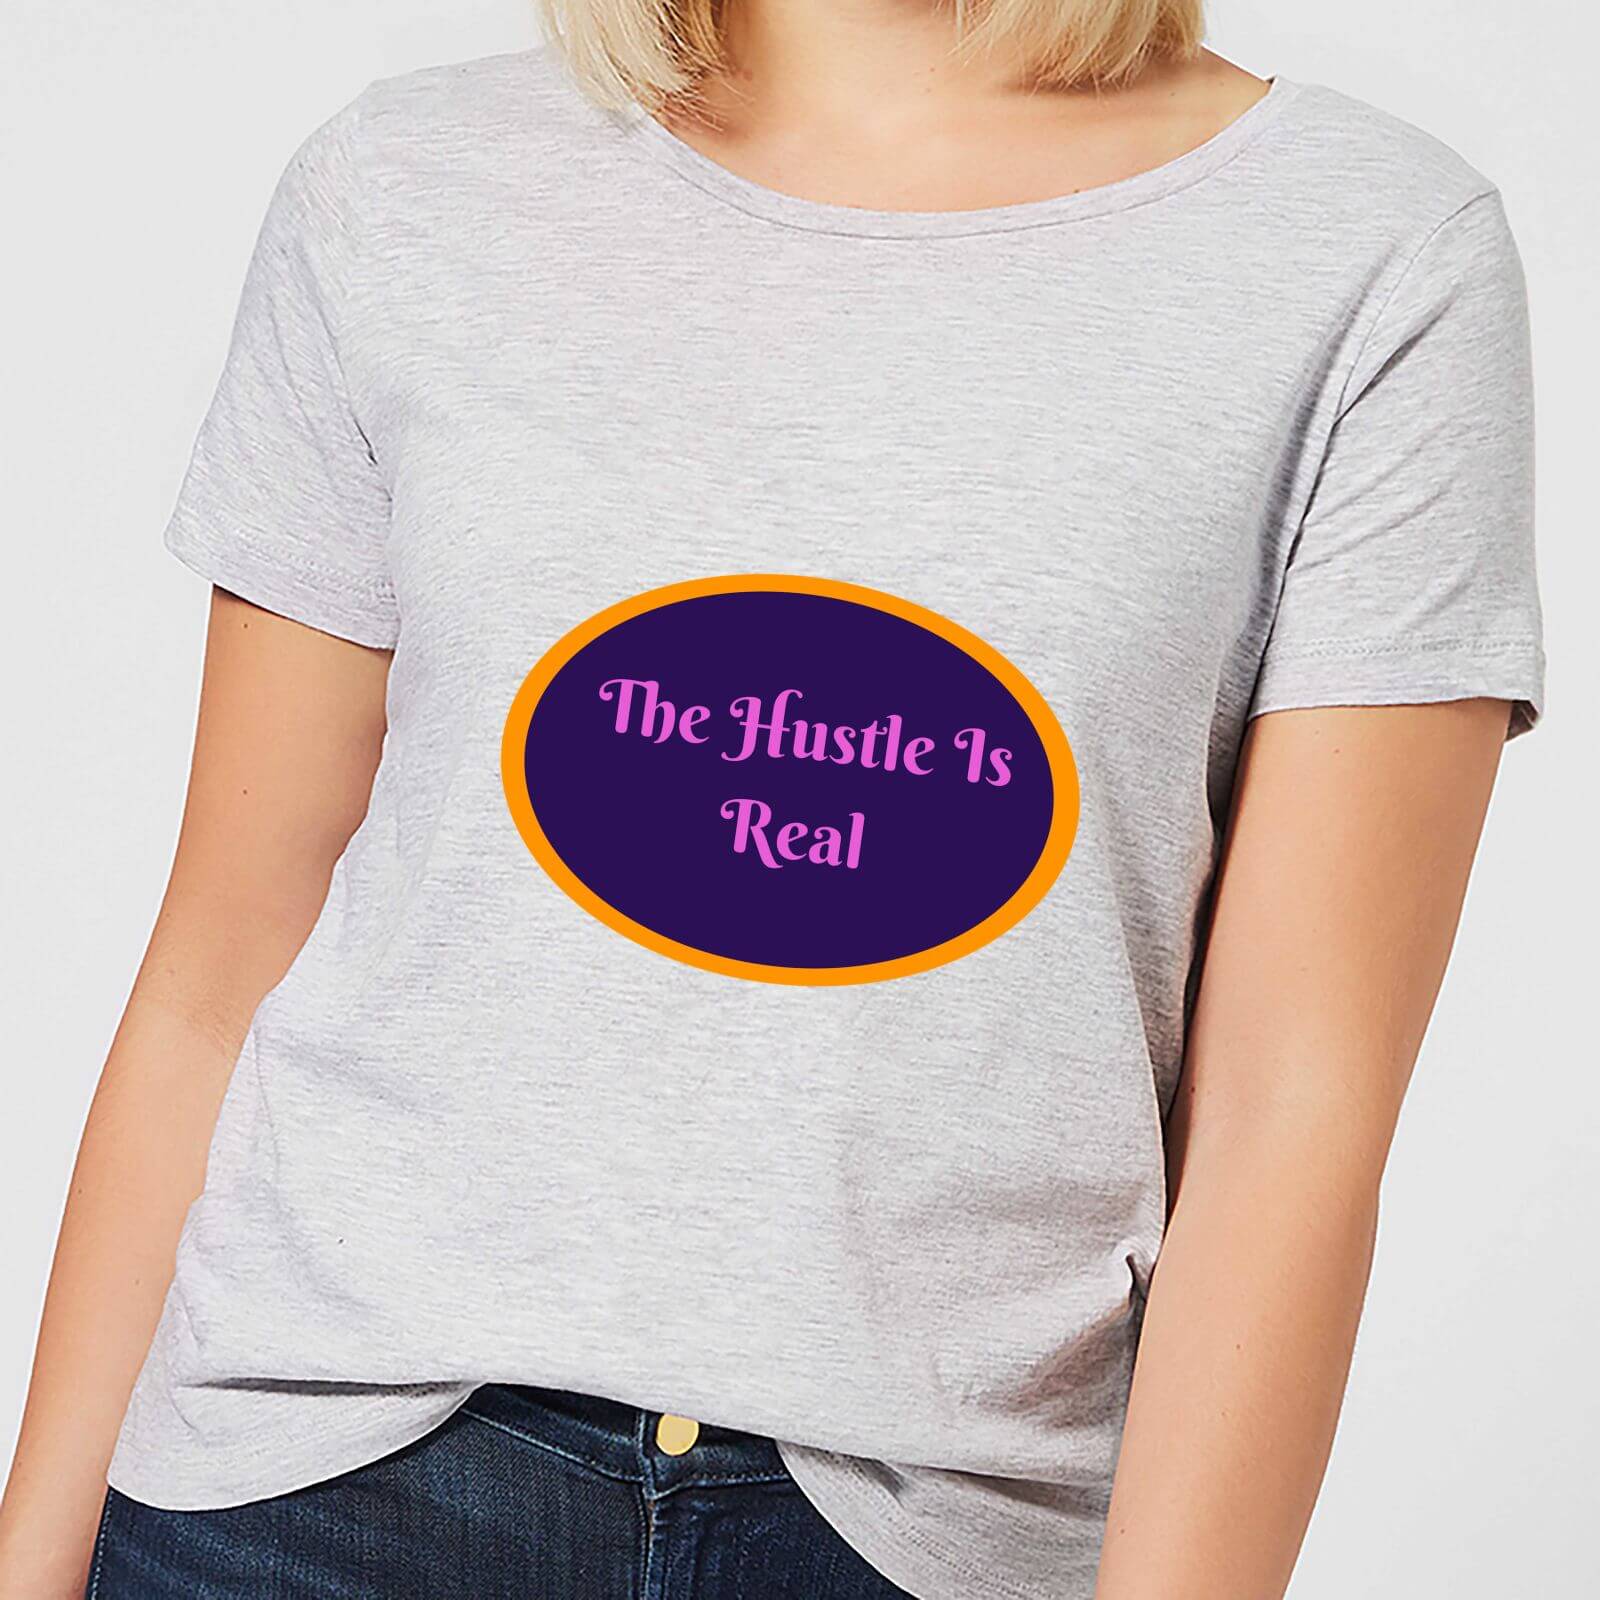 Lanre Retro The Hustle Is Real Women's T-Shirt - Grey - M